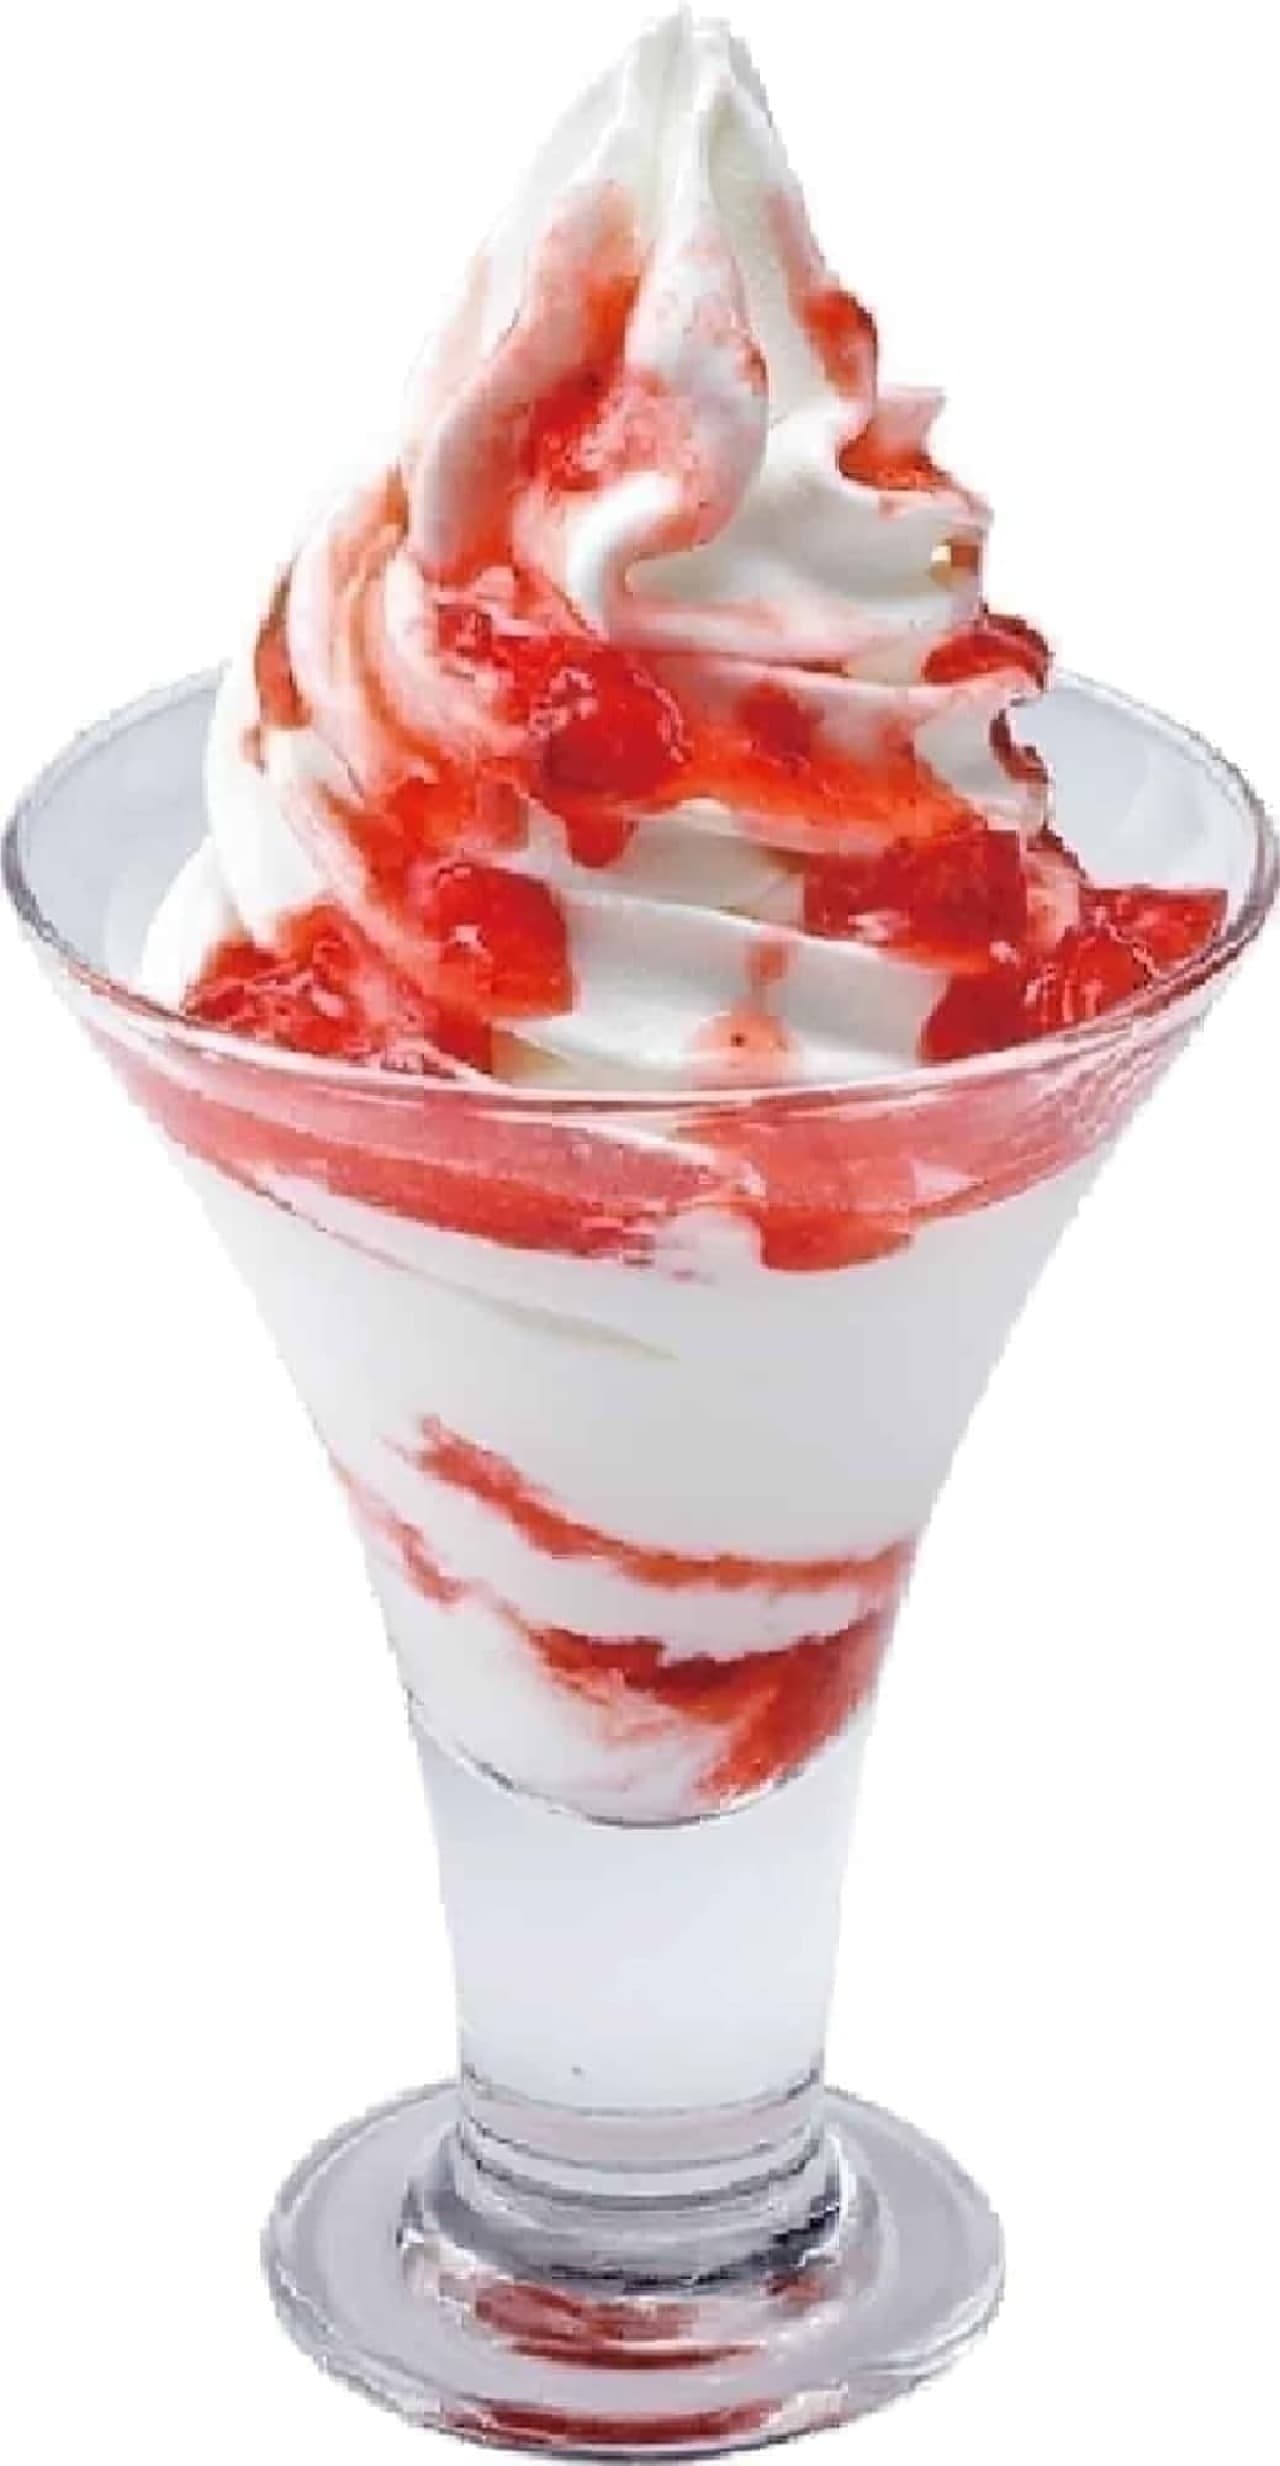 BIKKURI DONKEY "Hokkaido soft serve ice cream with strawberry sauce